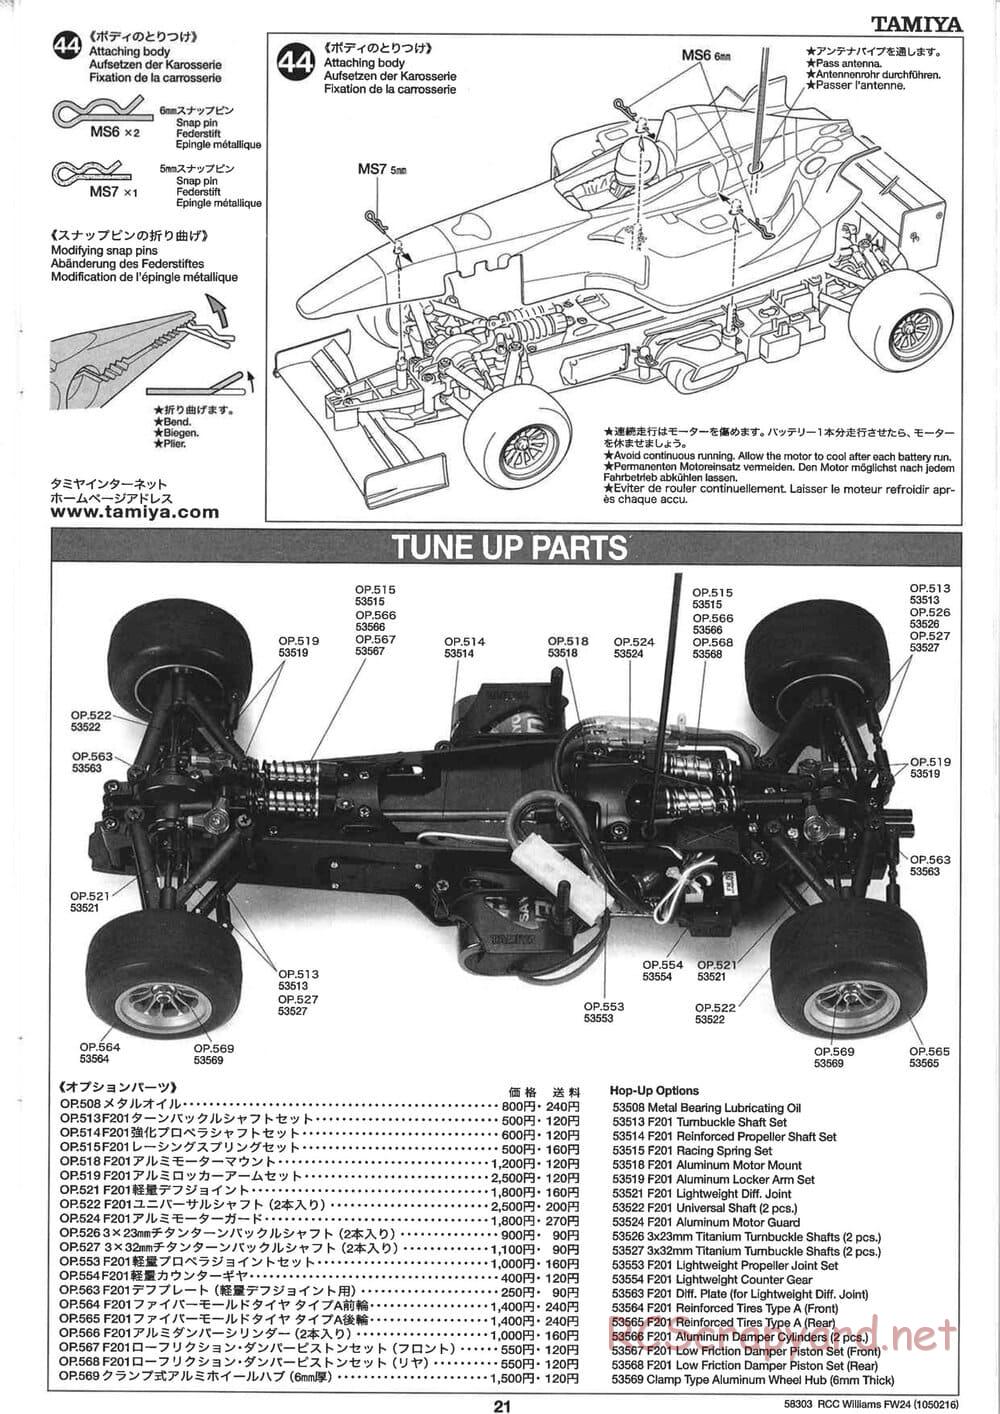 Tamiya - Williams F1 BMW FW24 - F201 Chassis - Manual - Page 21